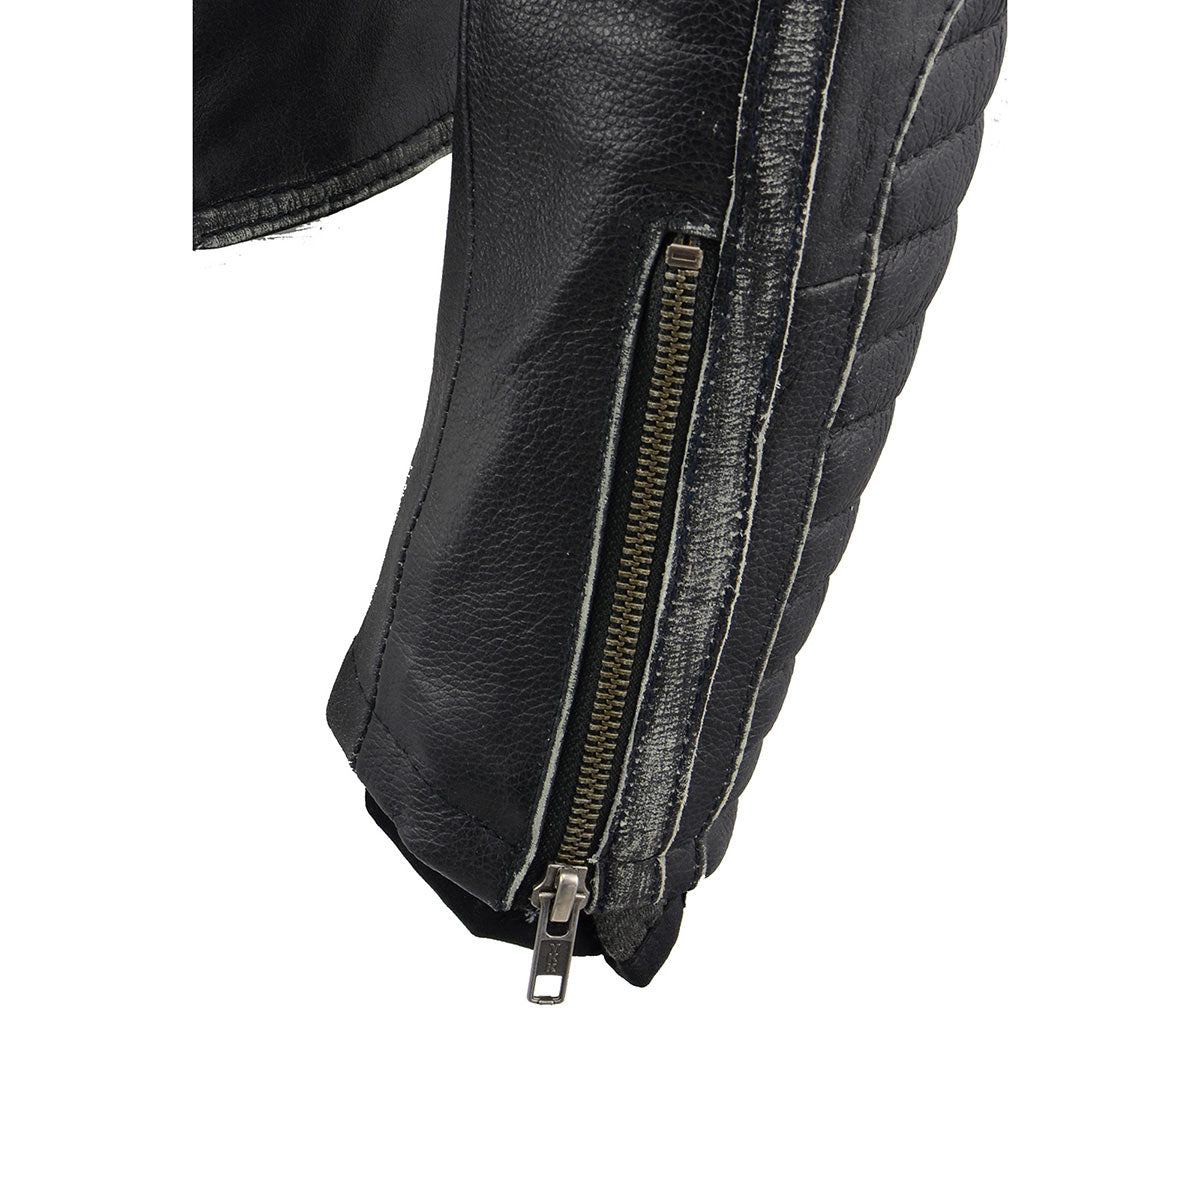 Men's Distressed Black Rubb Off Warm Biker Leather Retro Style Jacket